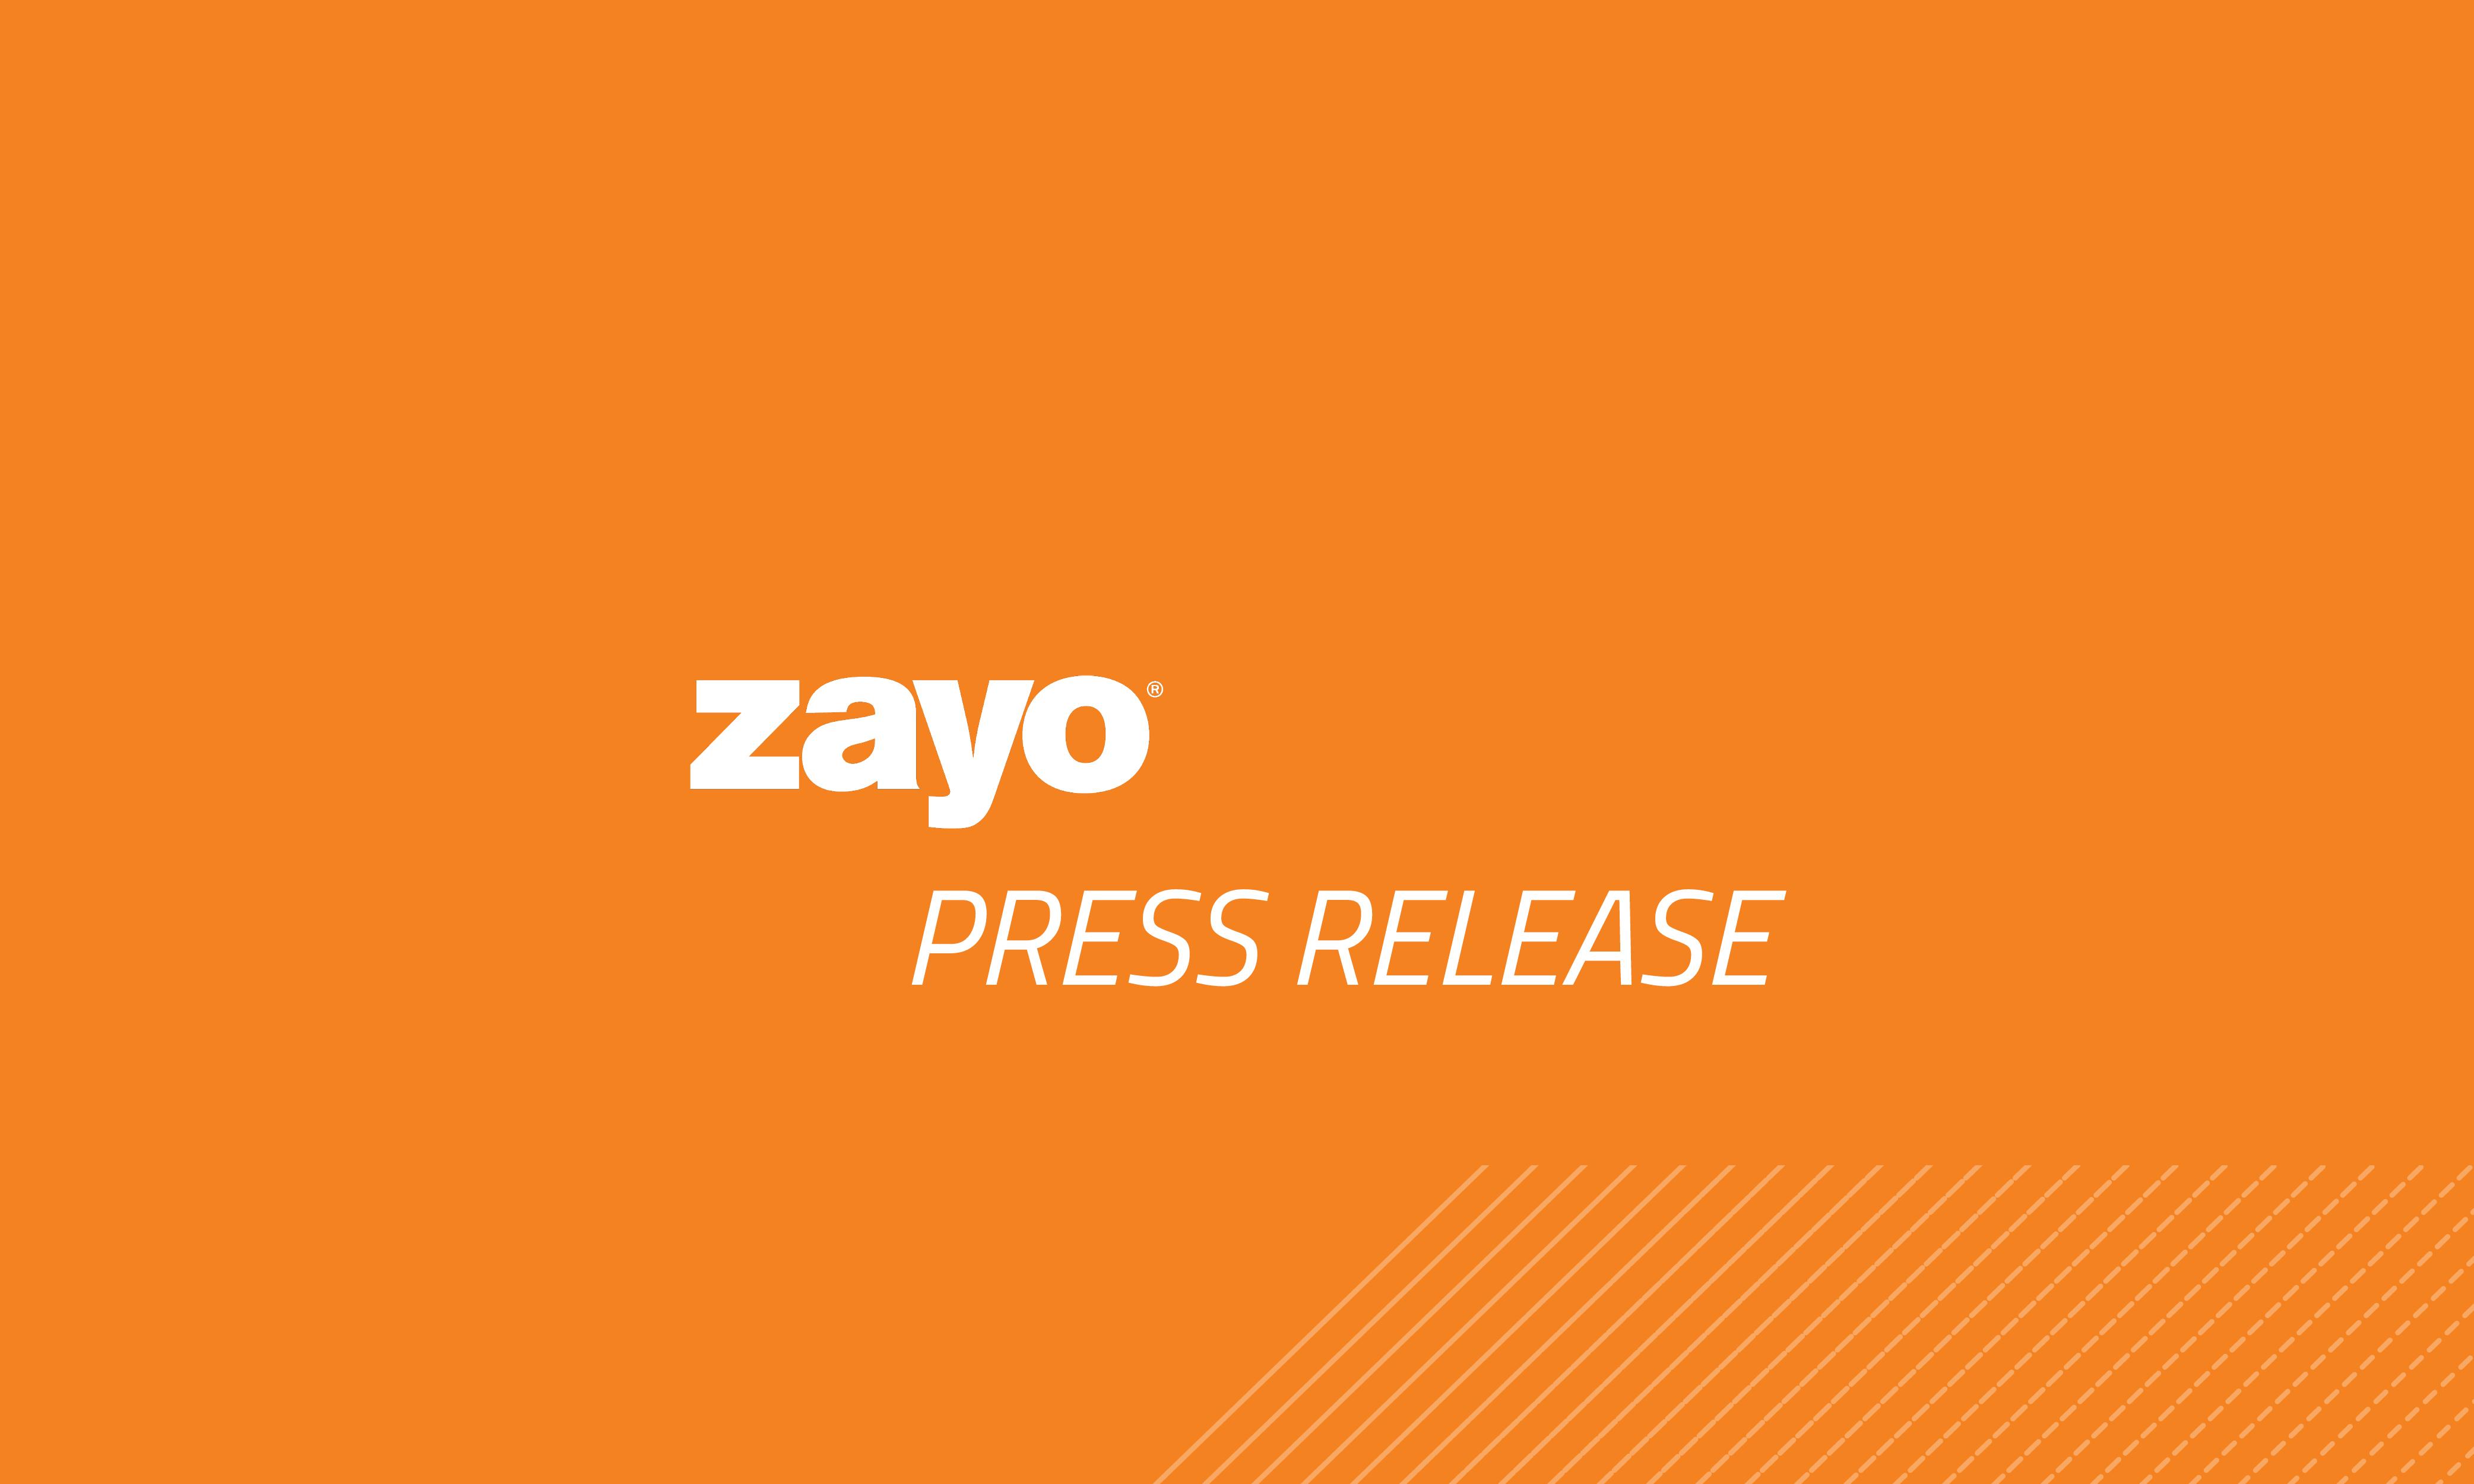 Zayo Logo - Large Cloud Provider Selects Zayo for Wavelength Connectivity. Zayo